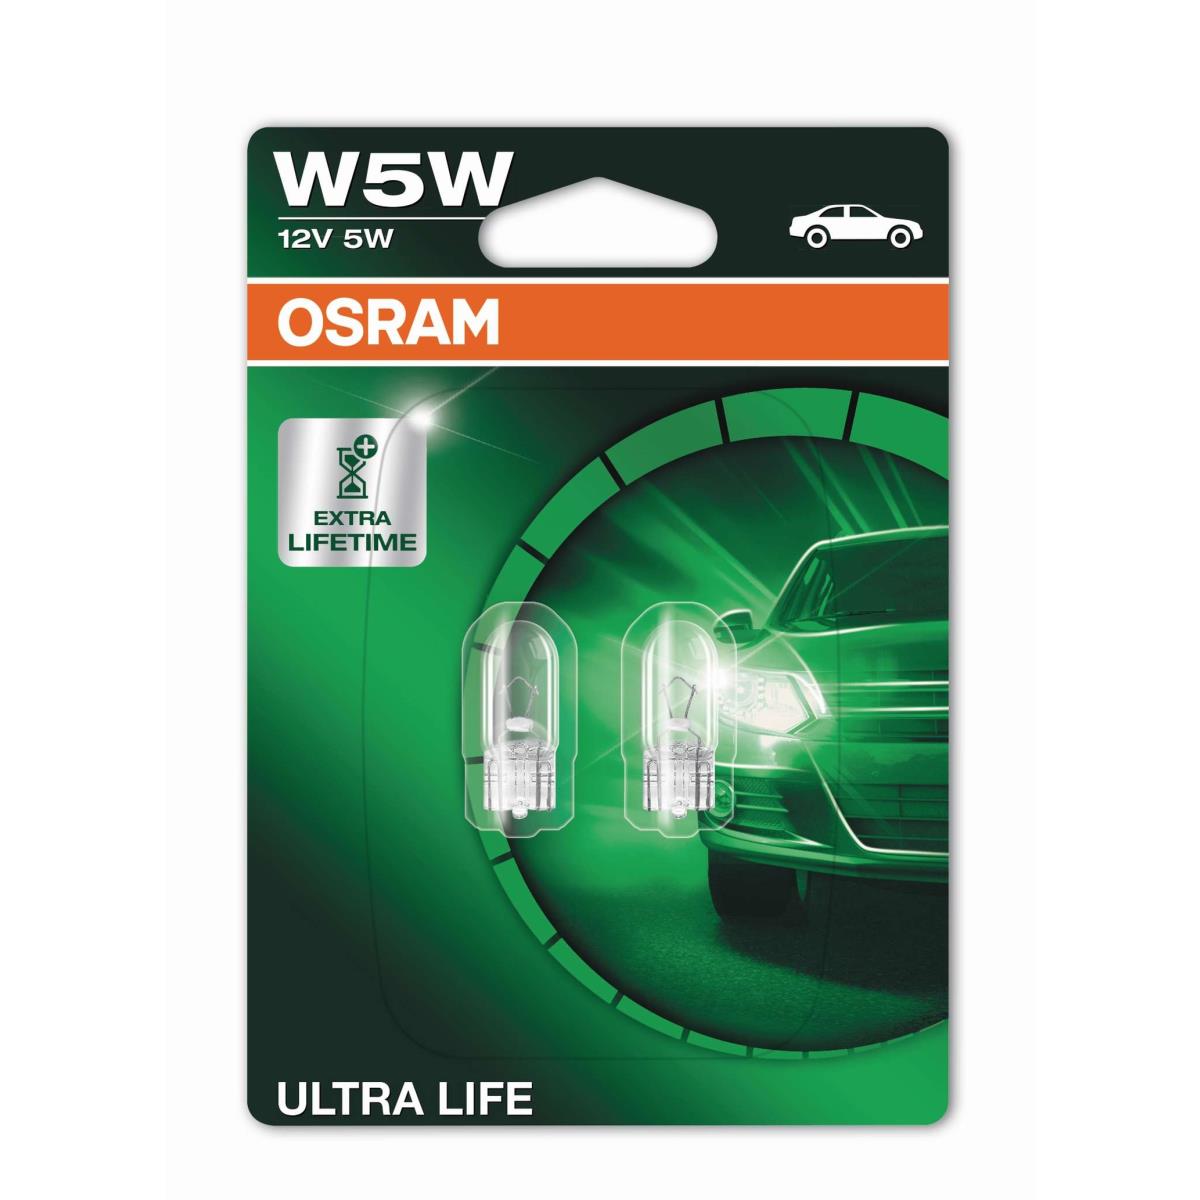 OSRAM W5W 12V 5W Halogen Ultra LIFE Blister Set 2 Stück Lampe Birne 2825ULT-02B